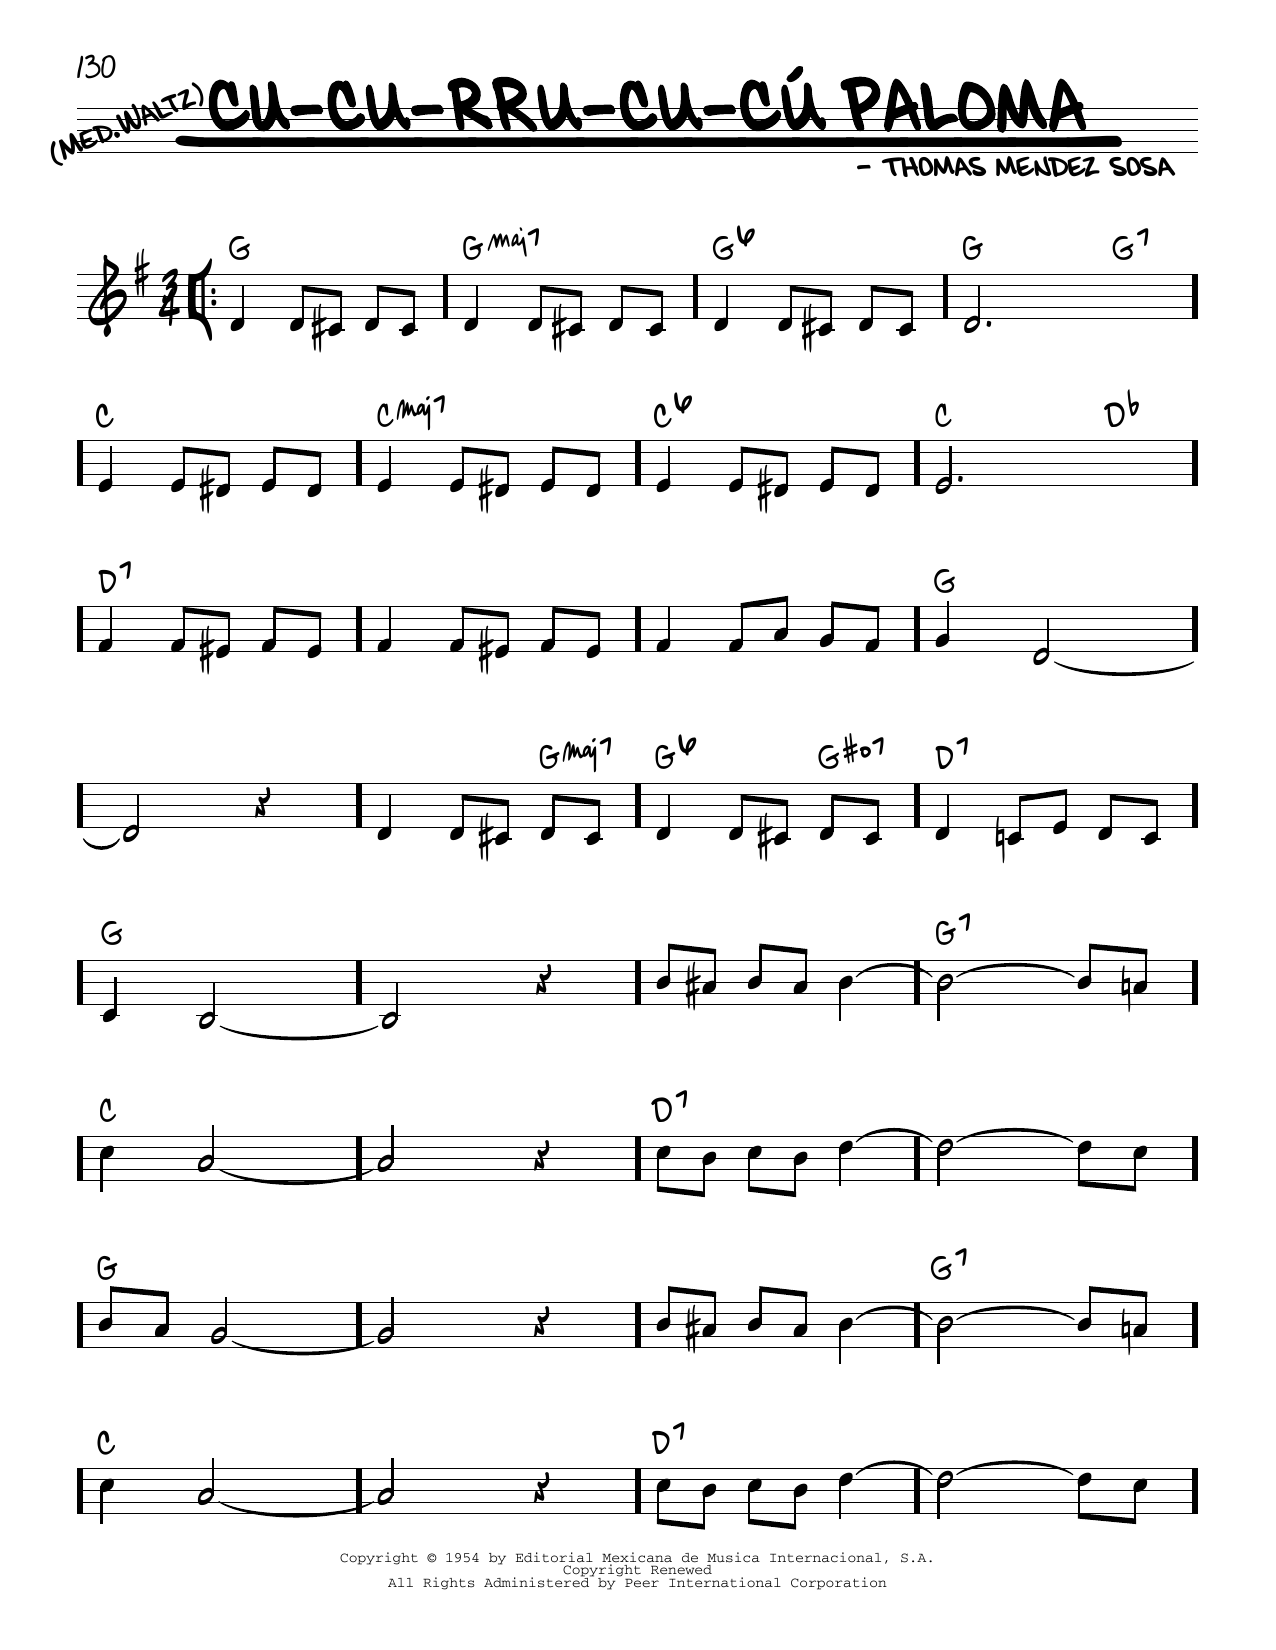 Thomas Mendez Sosa Cu-Cu-Rru-Cu-Cu Paloma Sheet Music Notes & Chords for Real Book – Melody & Chords - Download or Print PDF